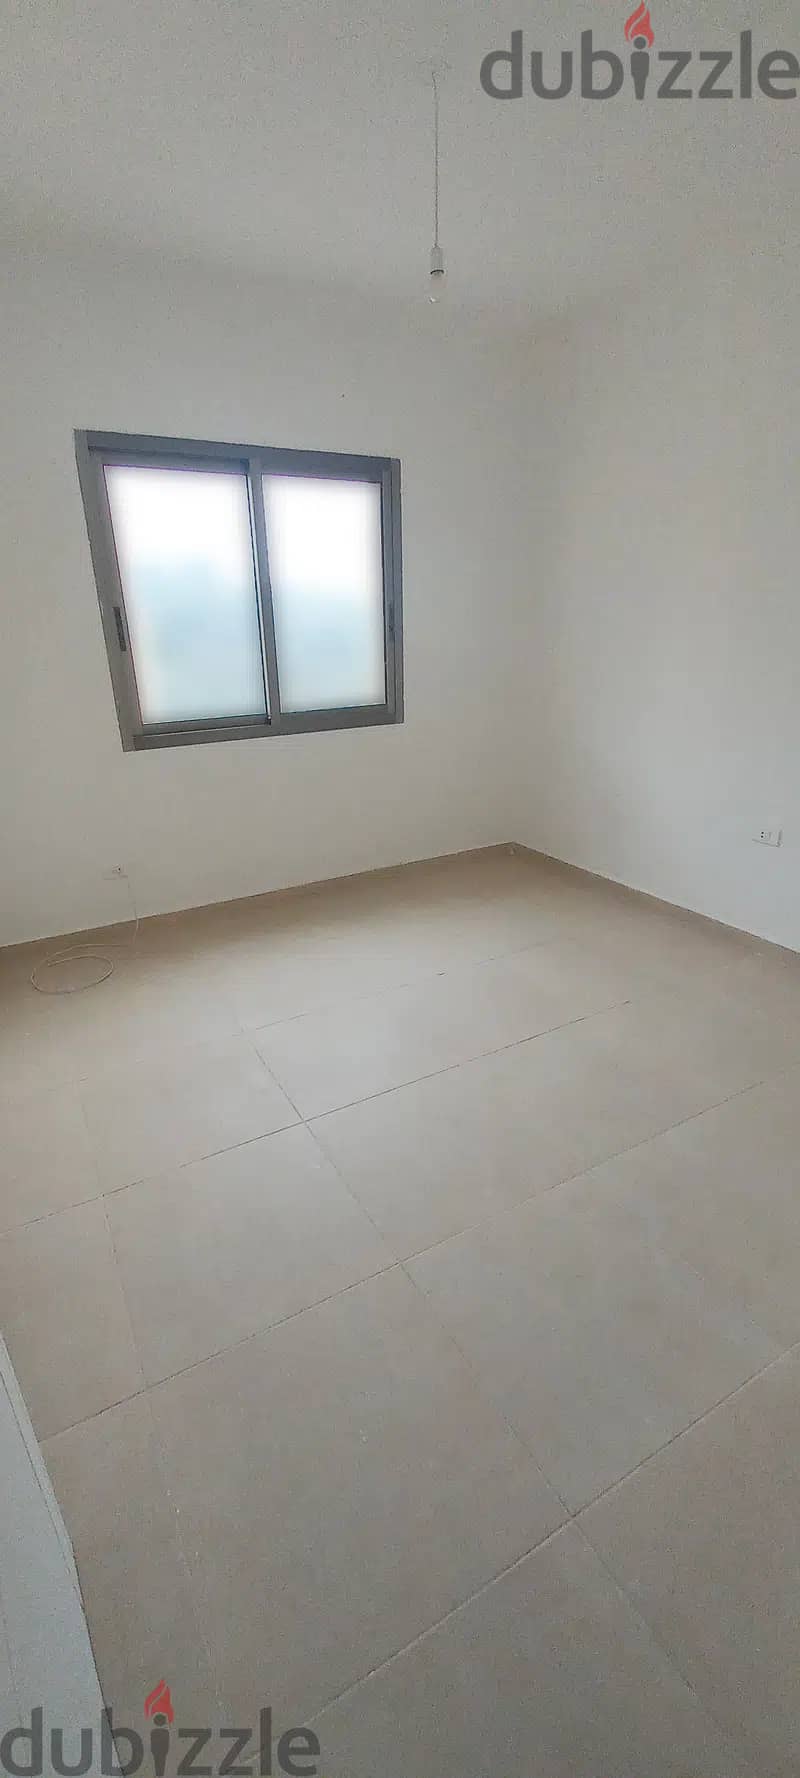 BRAND NEW Apartment for sale in Dibbiyeh,الدبية! REF#DI101918 3